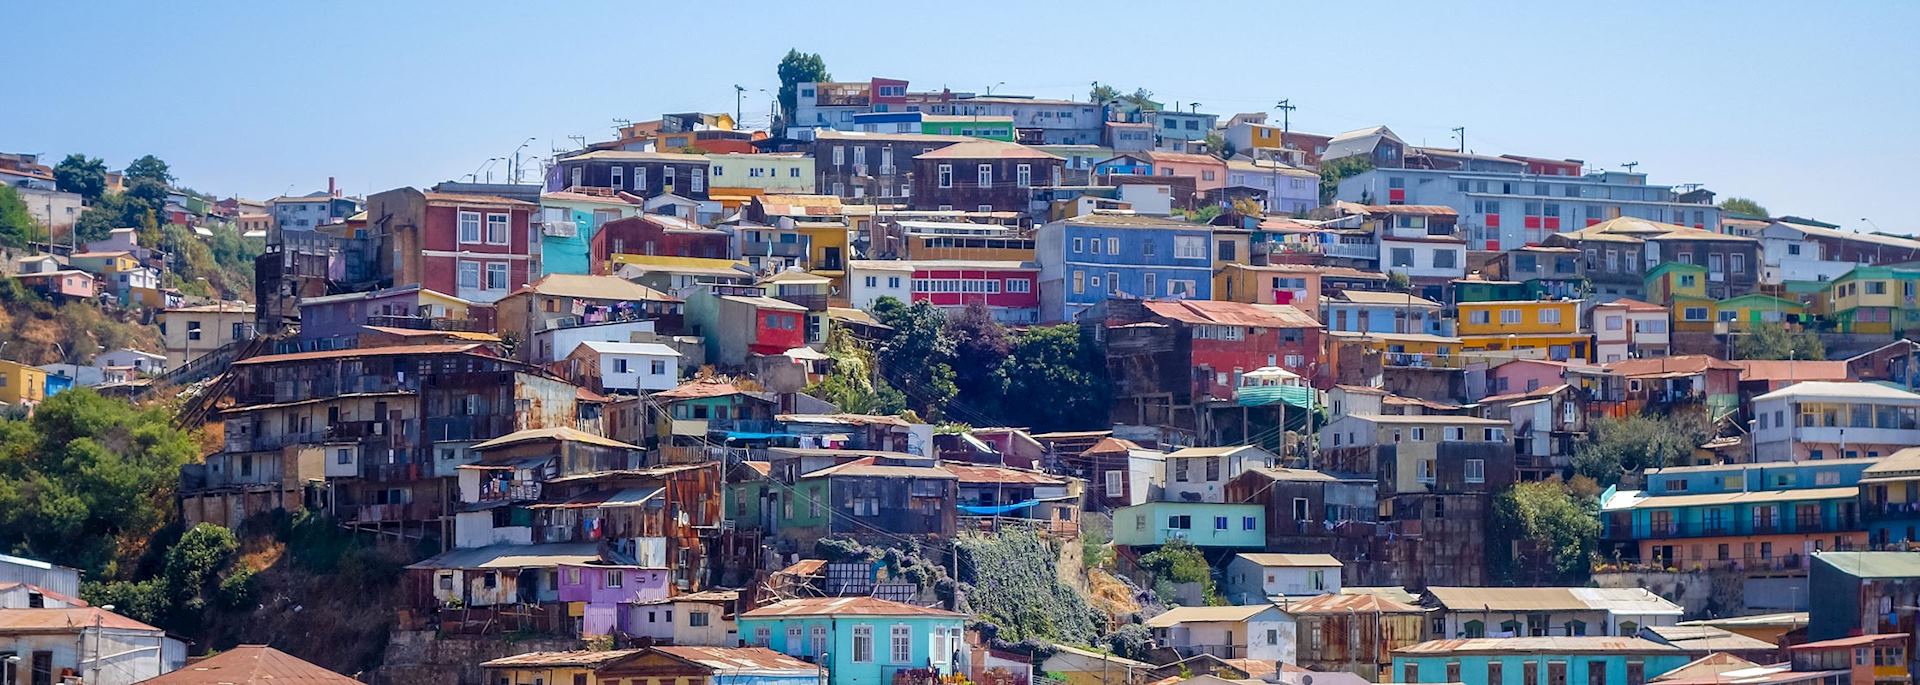 Valparaiso cityscape